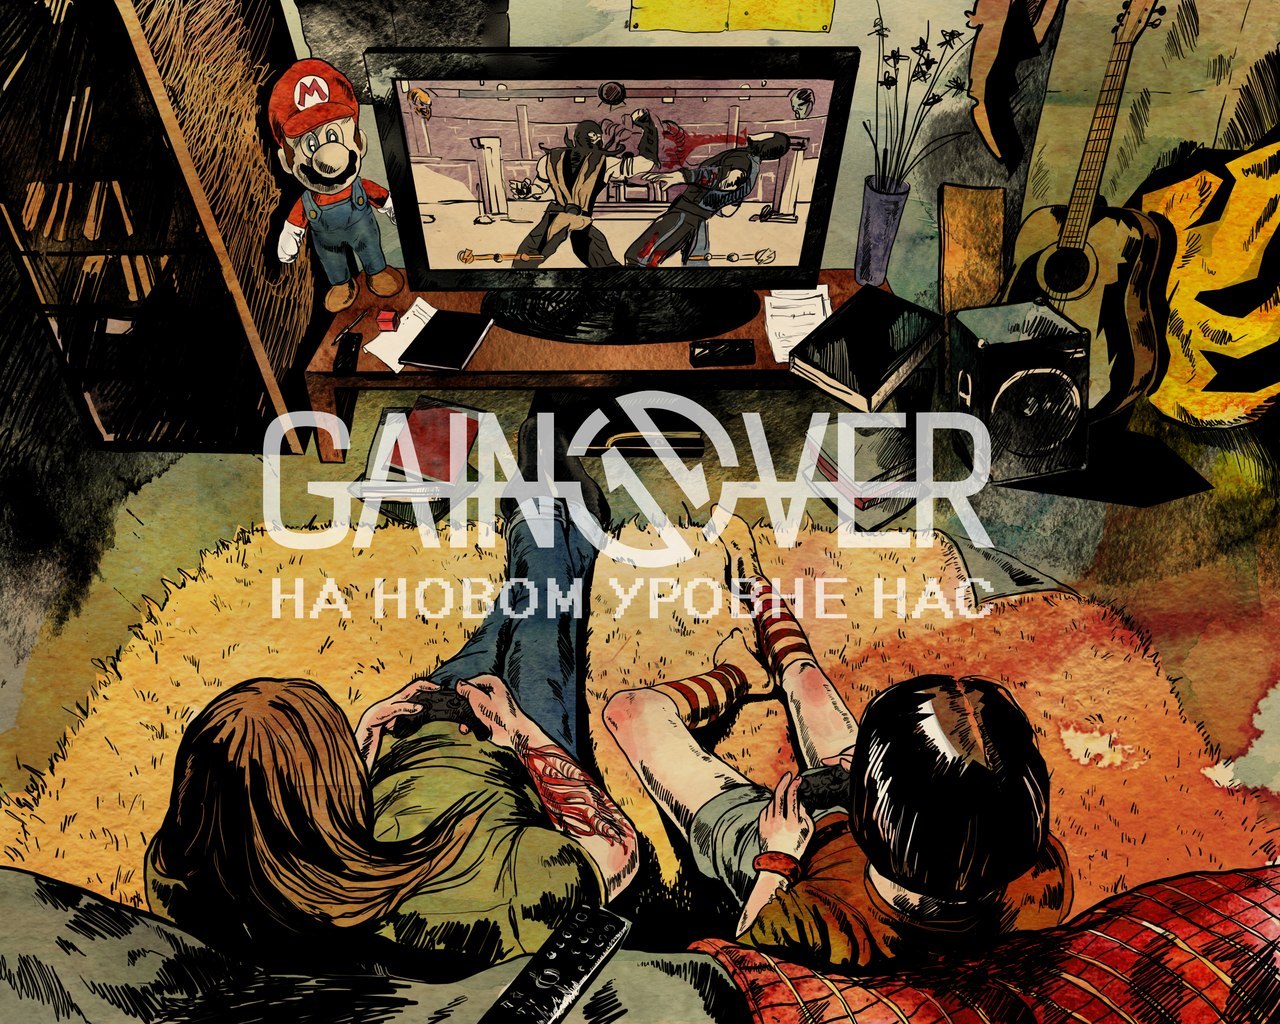 Gain Over -     (2015)